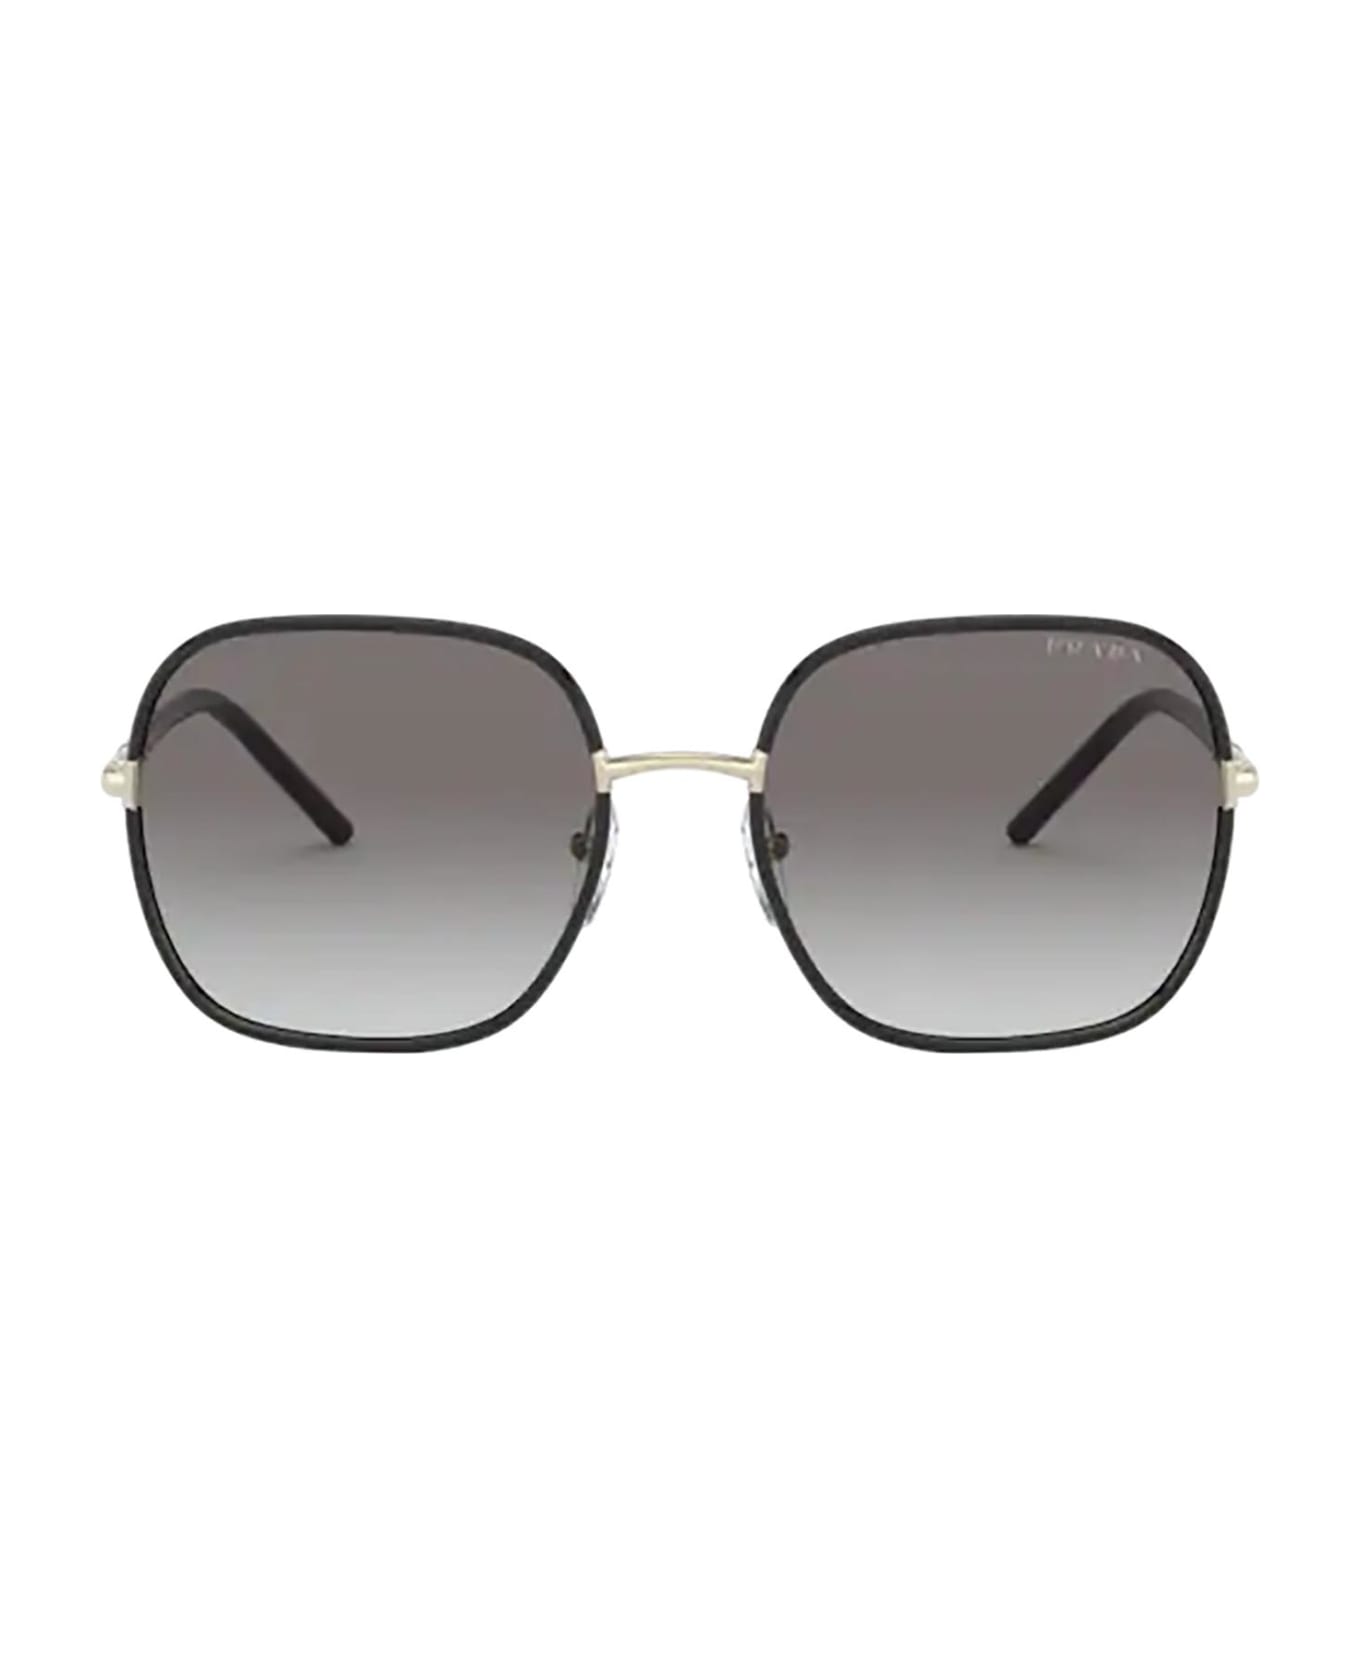 Prada Eyewear Pr 67xs Pale Gold / Black Sunglasses - Pale Gold / Black